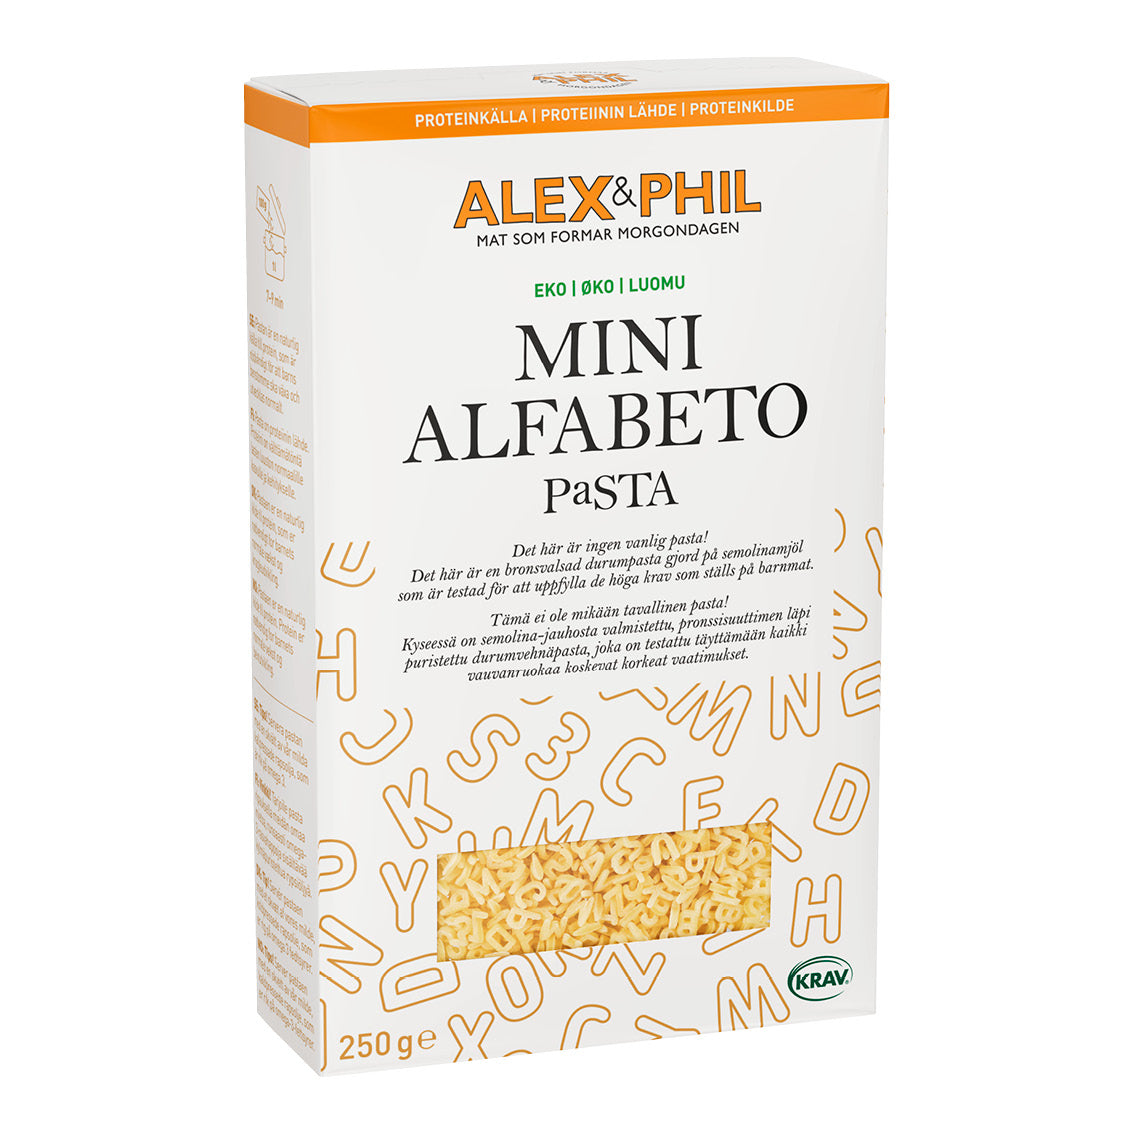 Alex's mini alfabeto pasta gjord med durum bron av alexphilfood.